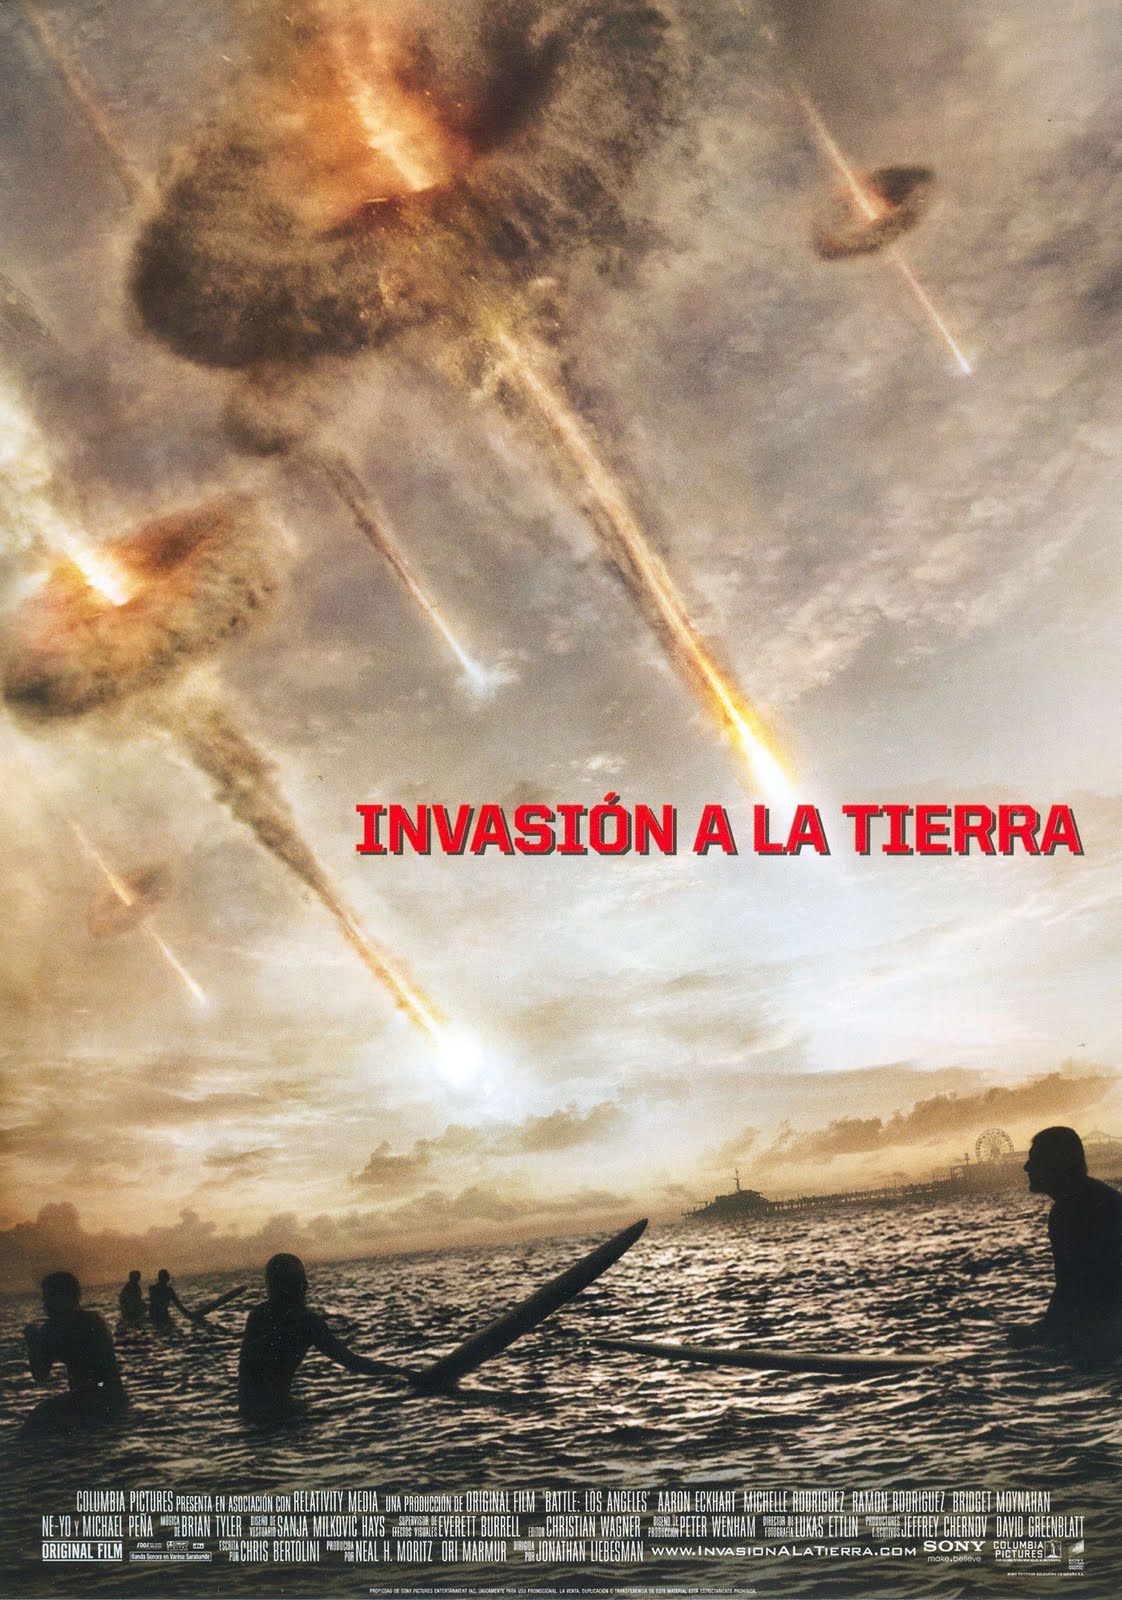 https://blogger.googleusercontent.com/img/b/R29vZ2xl/AVvXsEgUumQ-Gc5xTXFHLj24rkeMiBncQSGEvnej2XKwIDWedB5YCPtl520FeDBNXQnDHldMjwnMo9dxgIvf90nl1YgnojOaNZ7nLidMQhwbzhWYugbG6wpzQcp6mAe2PL-VGOeD4nc_XEFmnuc/s1600/Invasion_A_La_Tierra.jpg